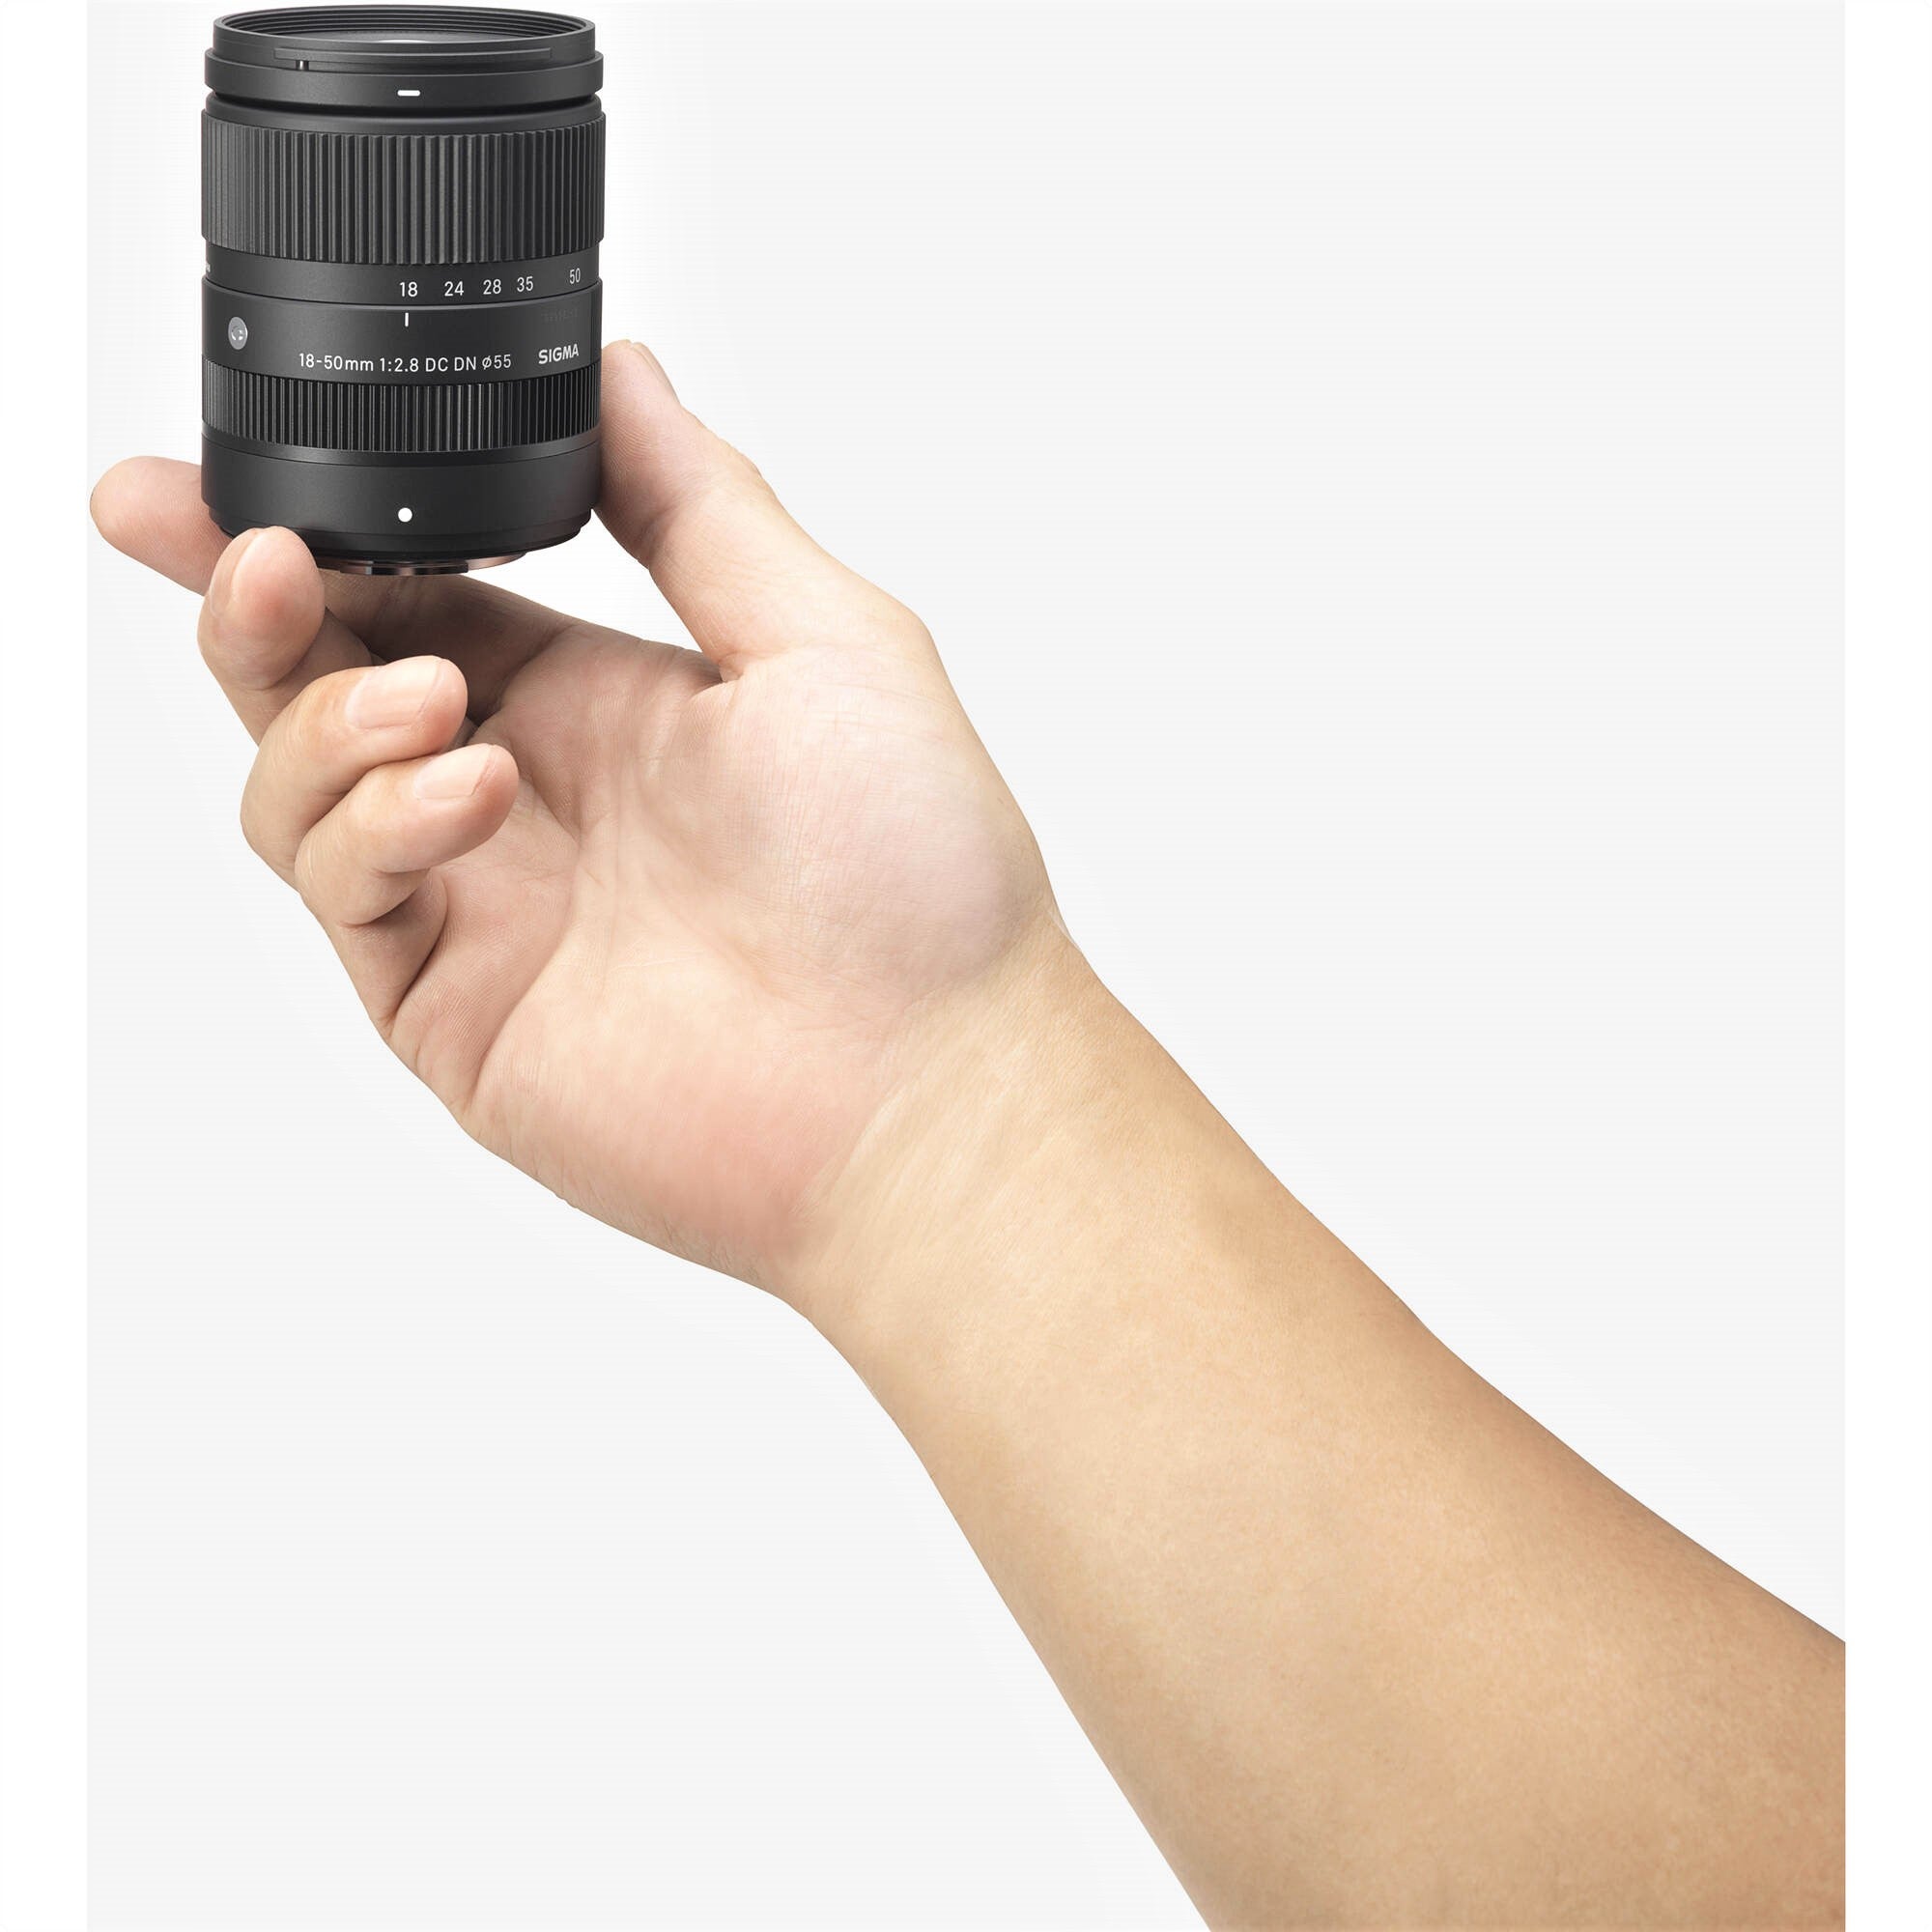 Sigma 18-50mm F2.8 DC DN Contemporary Lens